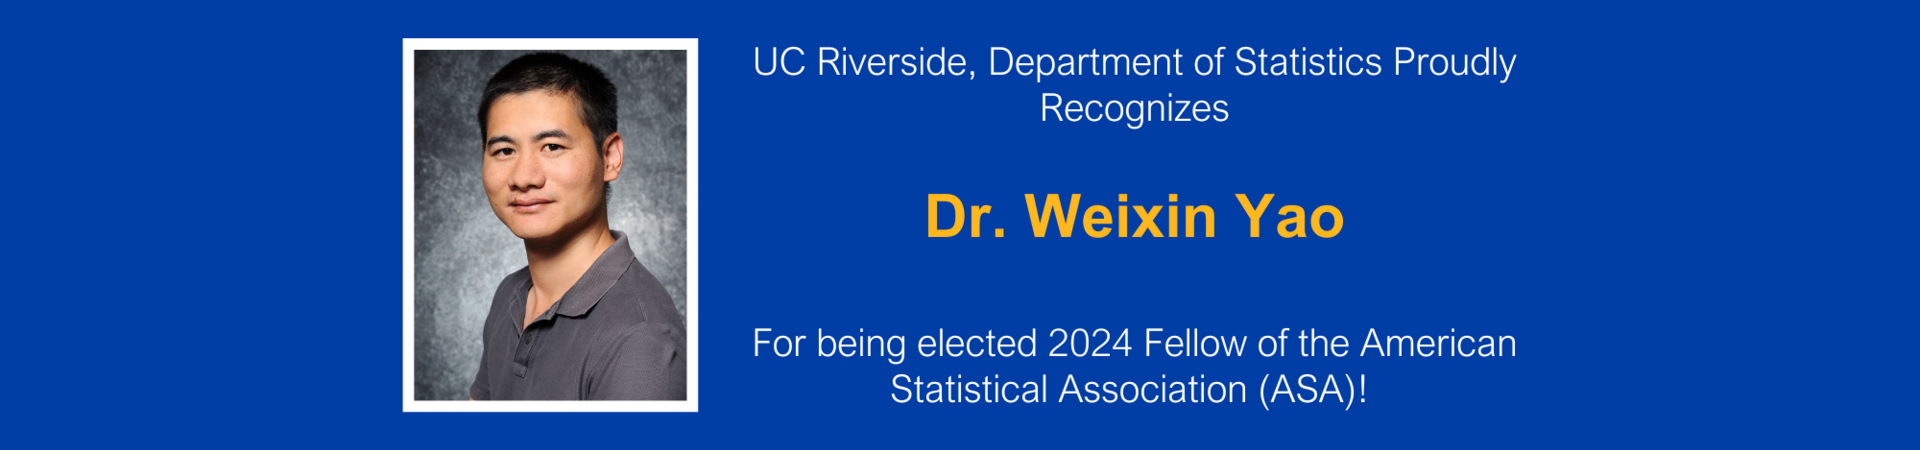 Dr. Weixin Yao elected 2024 Fellow of the ASA